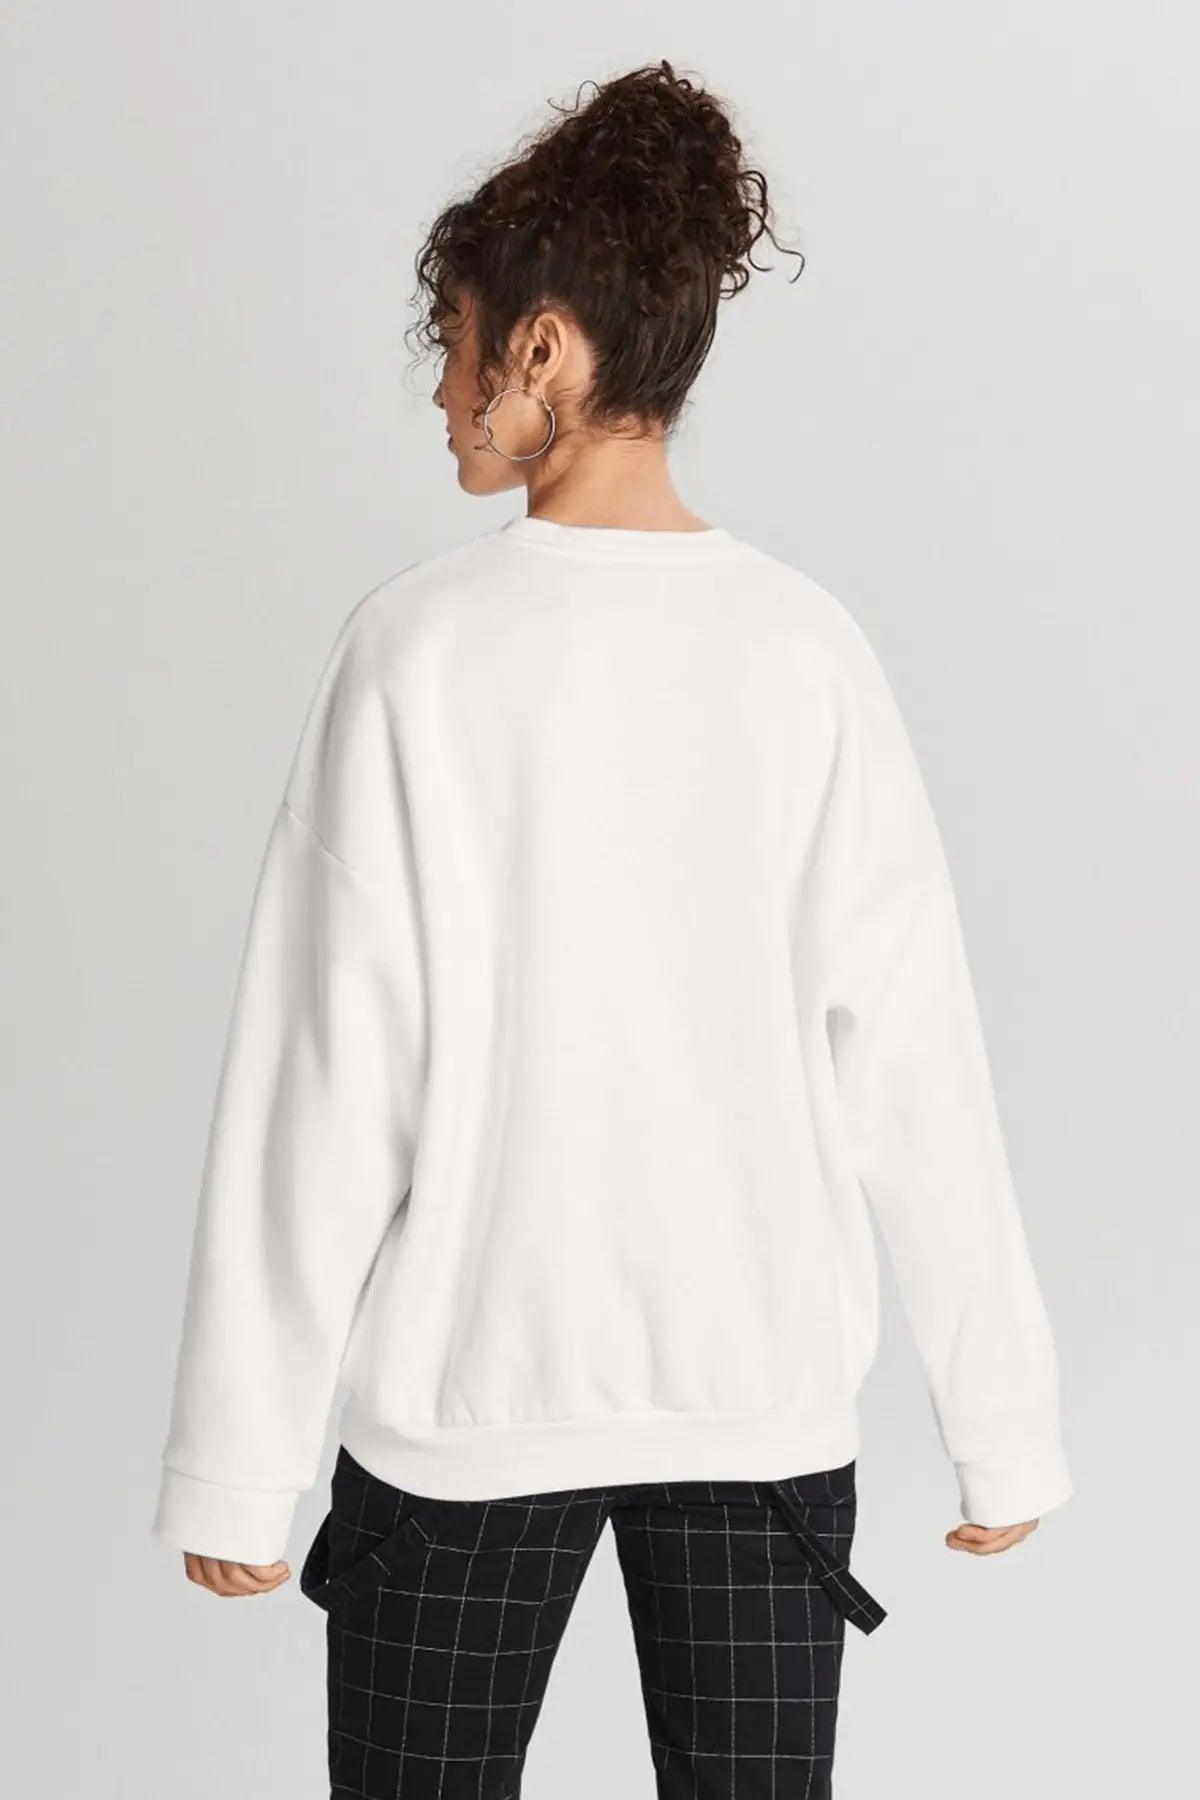 Abstract Gallery Oversize Kadın Sweatshirt - PΛSΛGE